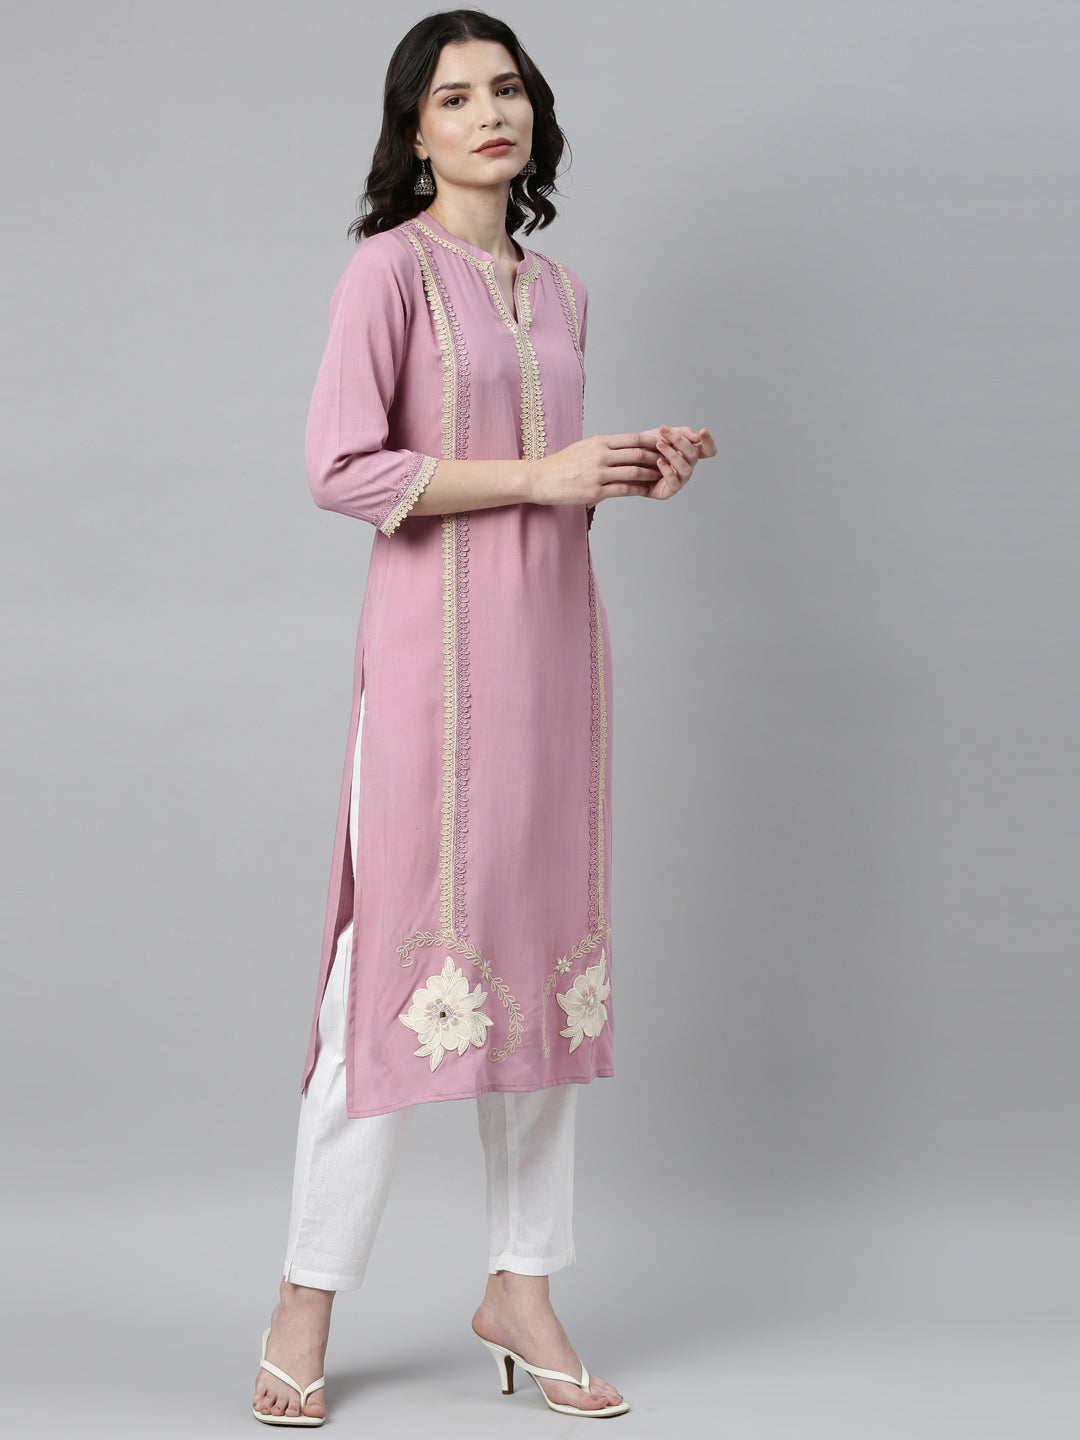 Neeru's Lavender Color Rayon Fabric Kurta